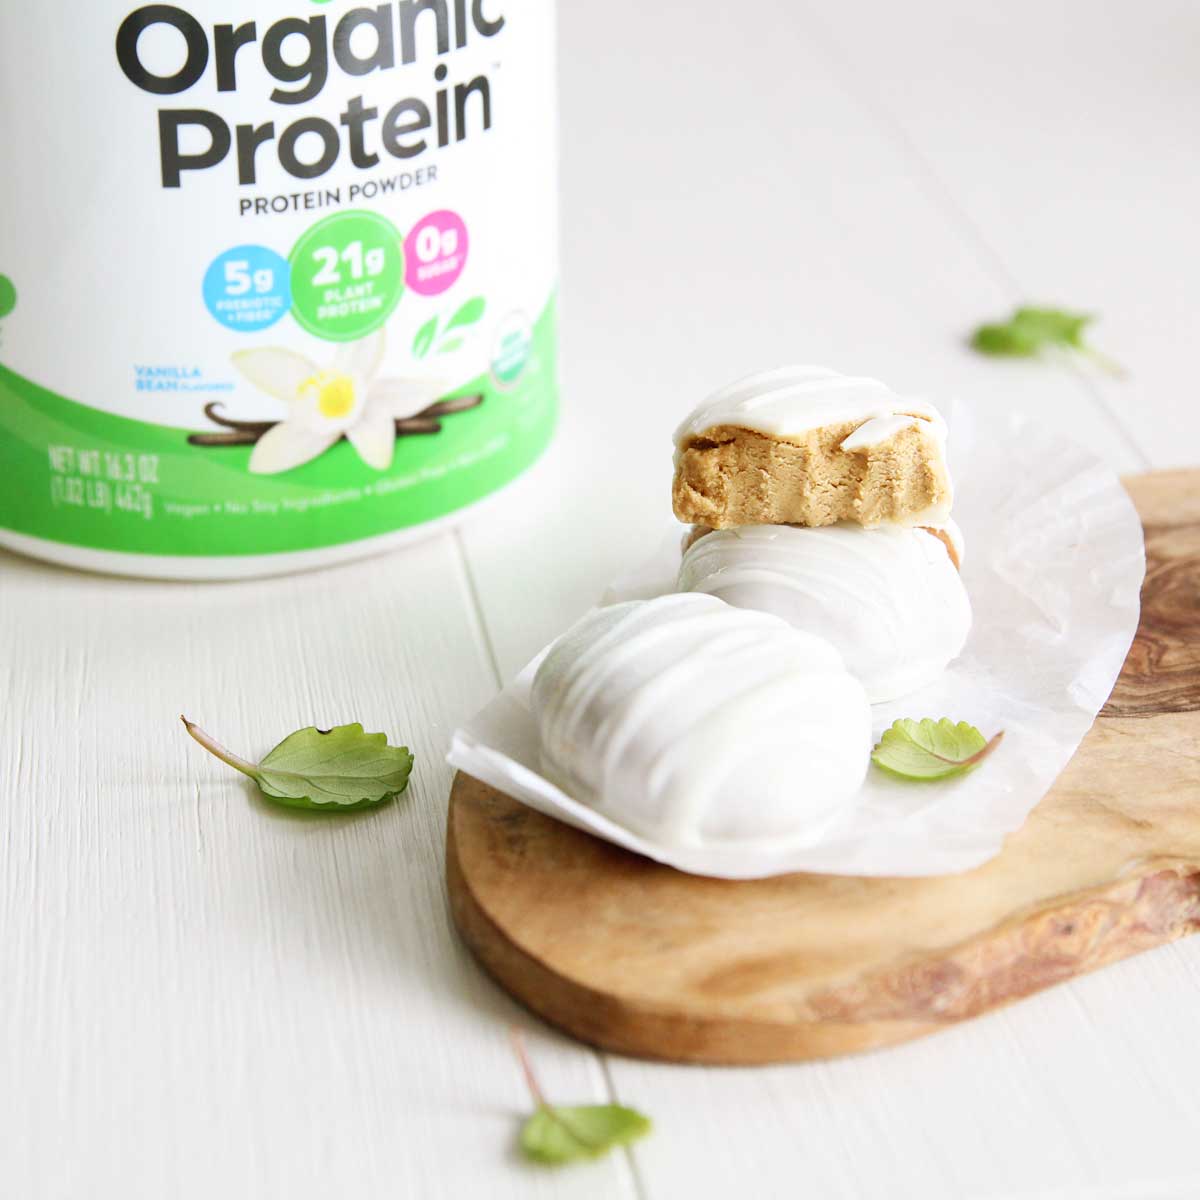 Healthy Protein Powder Easter Eggs Recipe (Just 3 ingredients!) - Pistachio Nice Cream